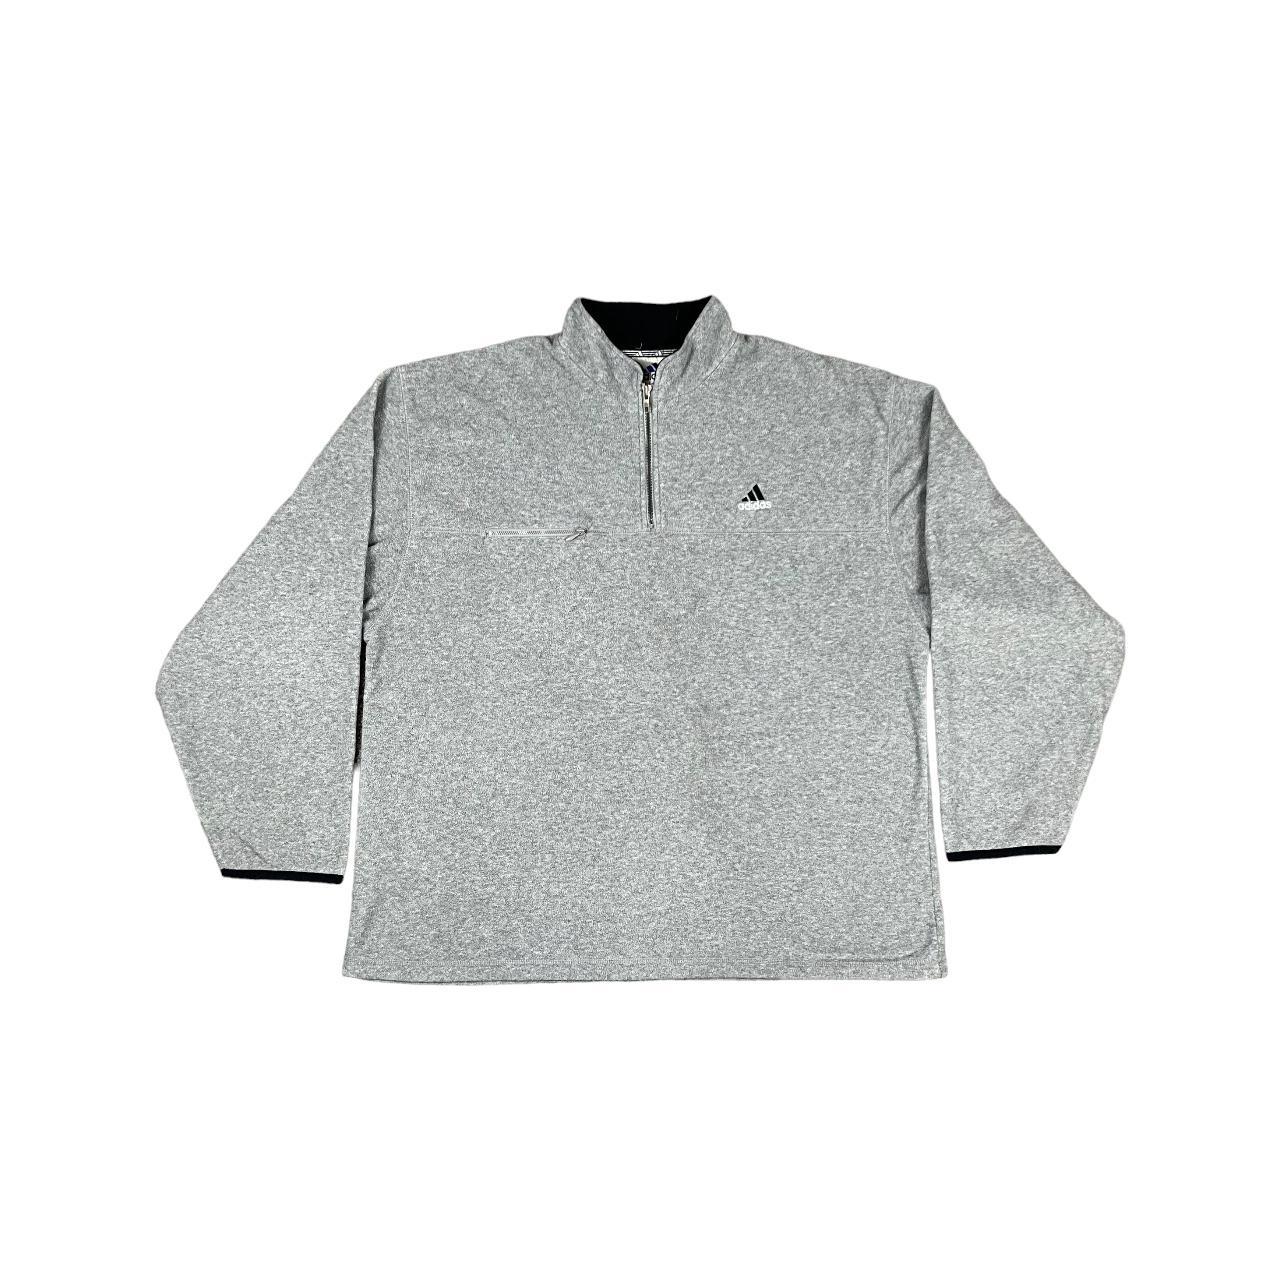 Vintage 90s Adidas Fleece Sweatshirt Price: $46.95... - Depop